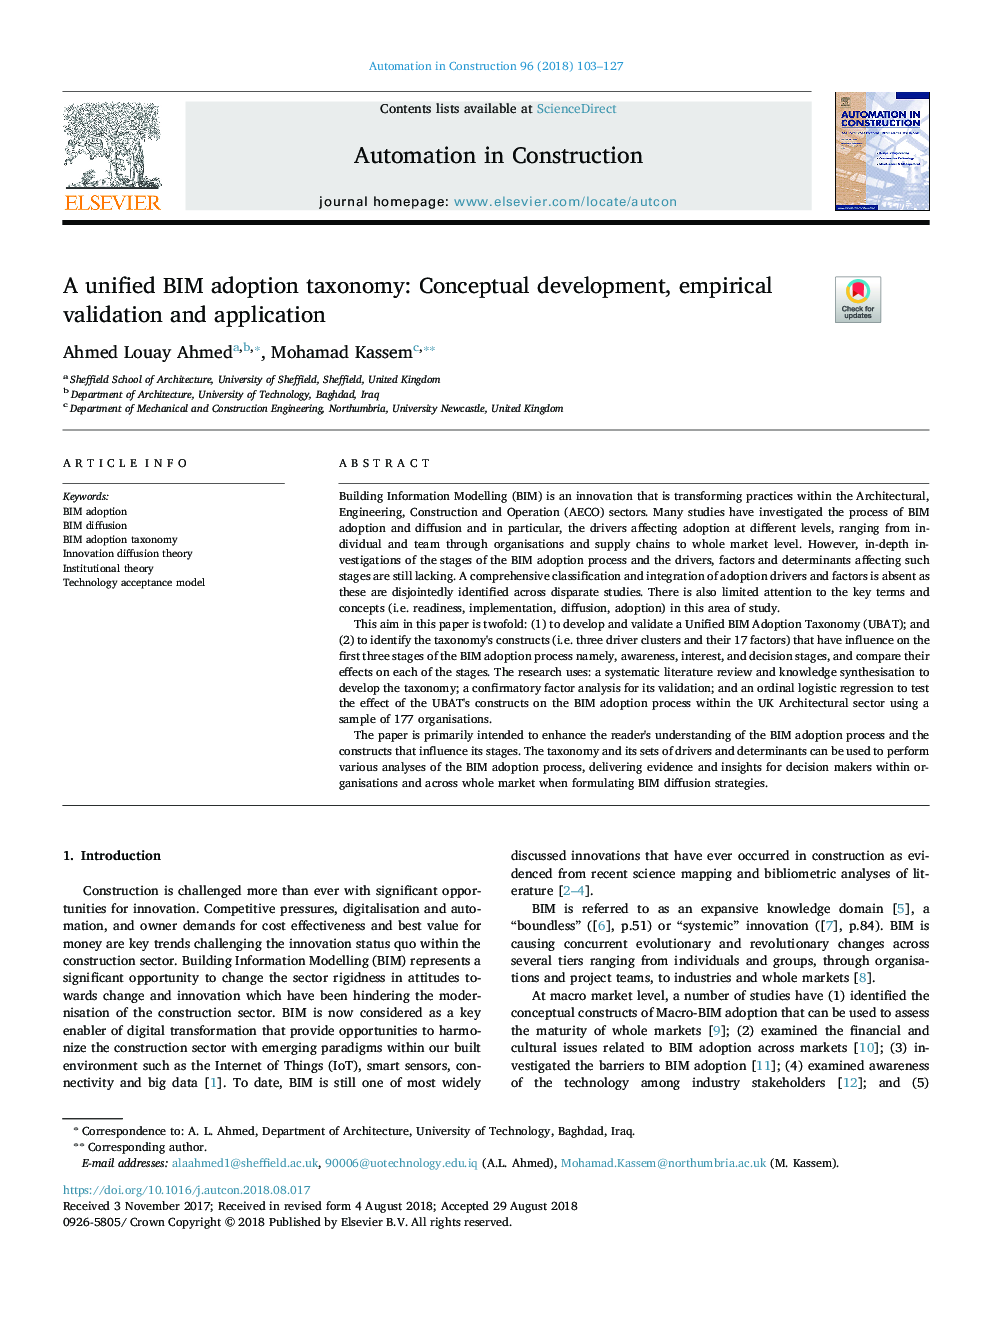 A unified BIM adoption taxonomy: Conceptual development, empirical validation and application